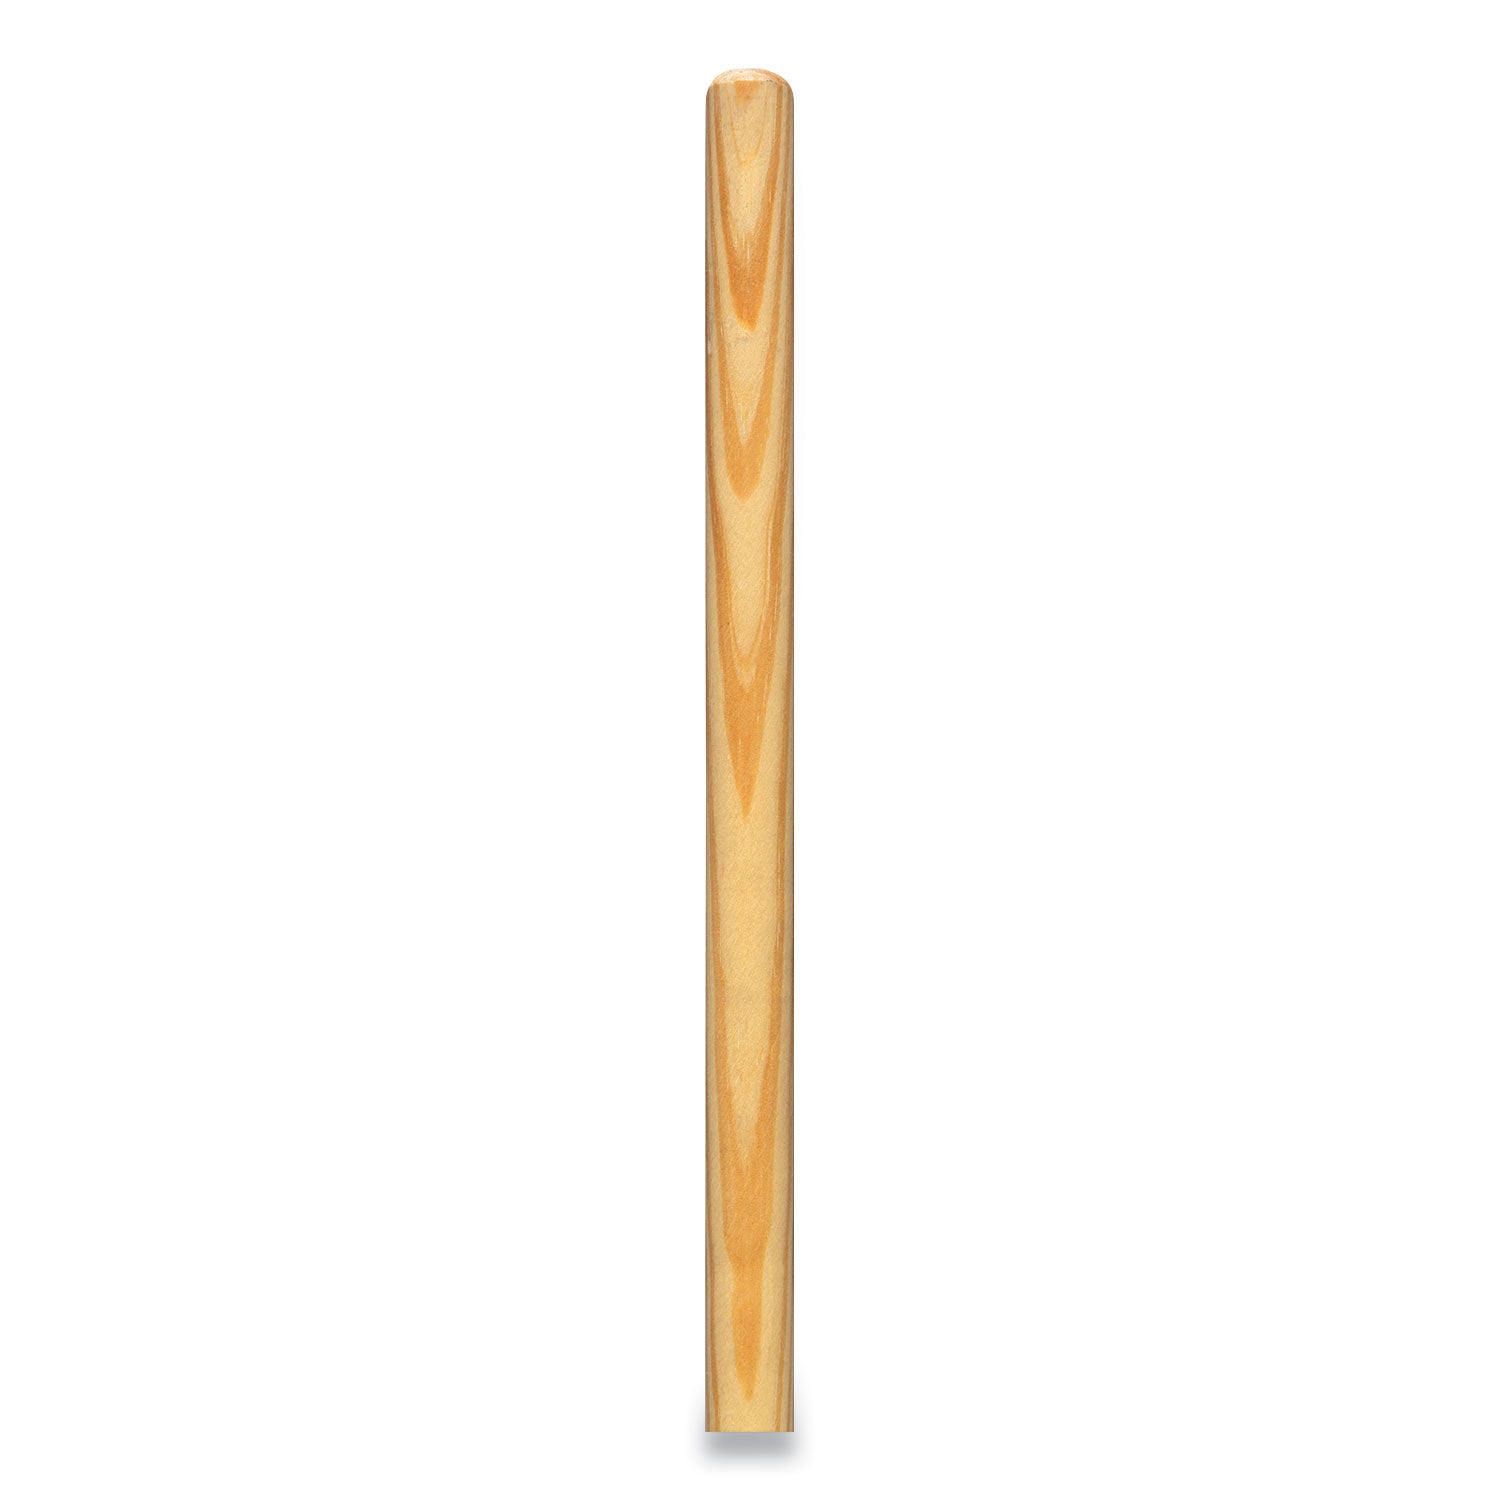 push-broom-handle-with-wood-thread-wood-60-natural_cwz24420792 - 2